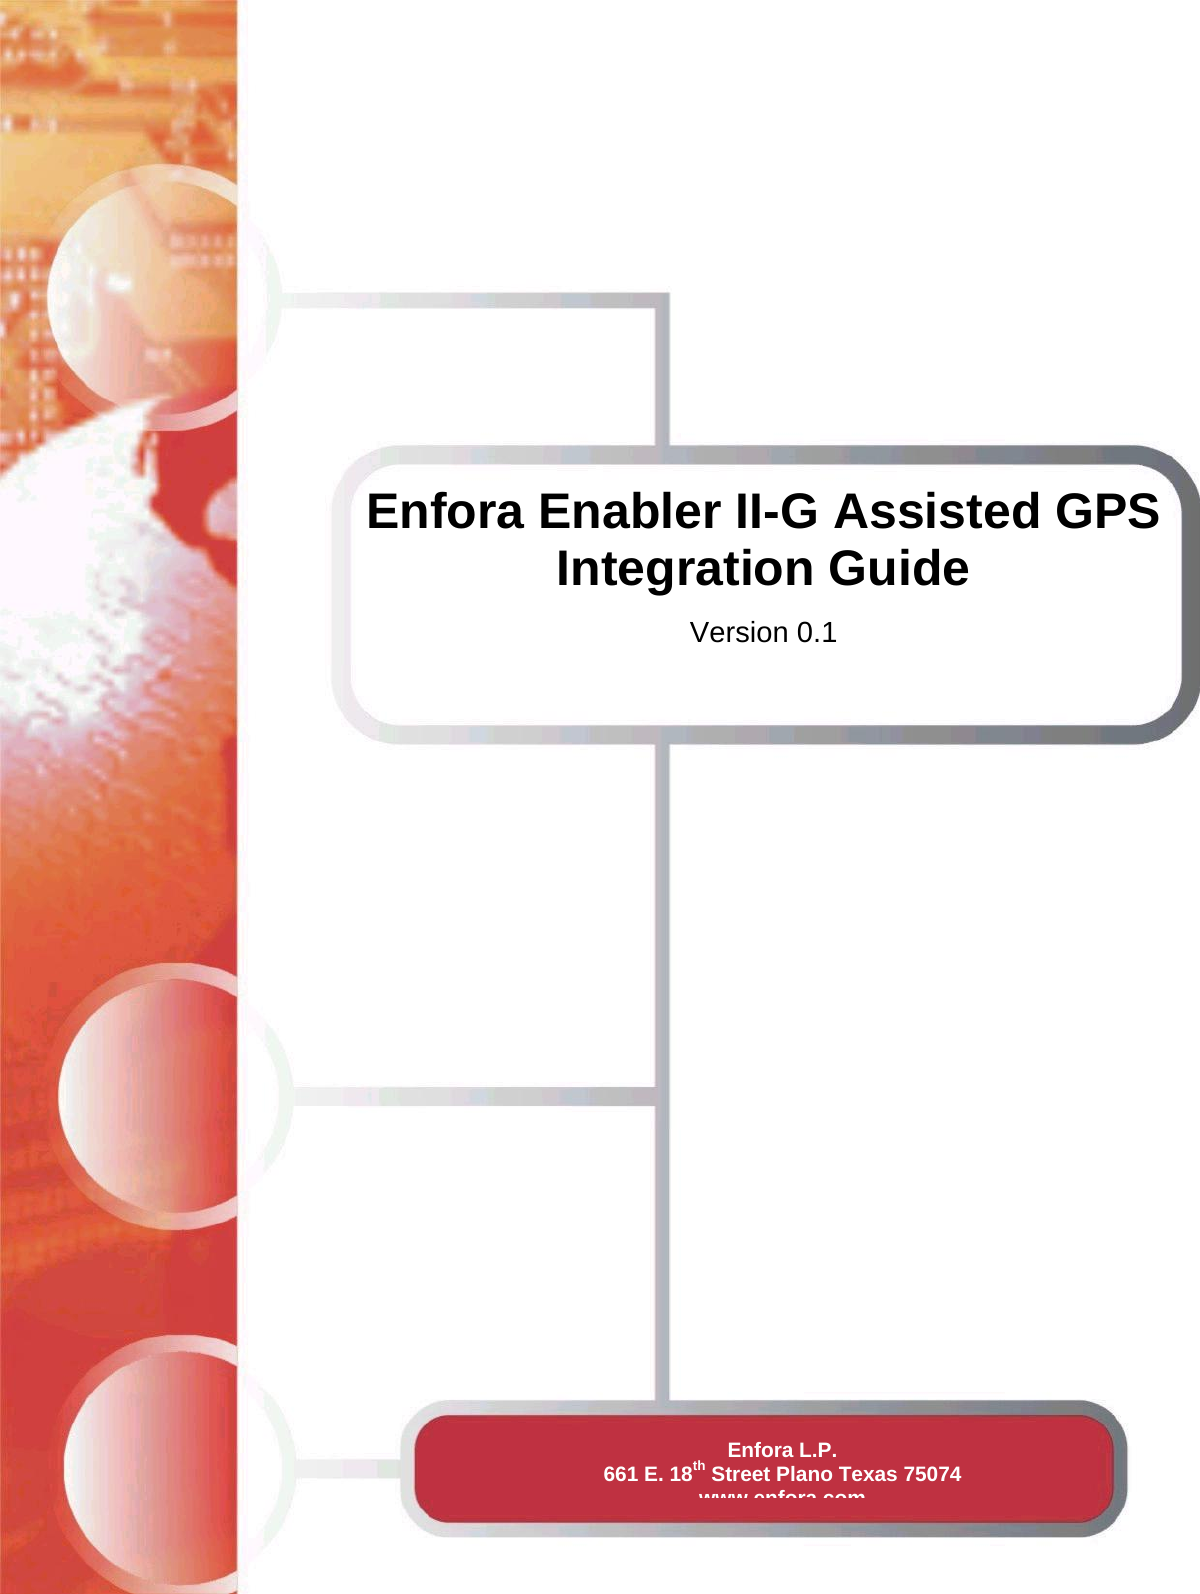  Enfora Enabler II-G Assisted GPSIntegration Guide  Version 0.1 Enfora L.P.   661 E. 18th Street Plano Texas 75074   www enfora com